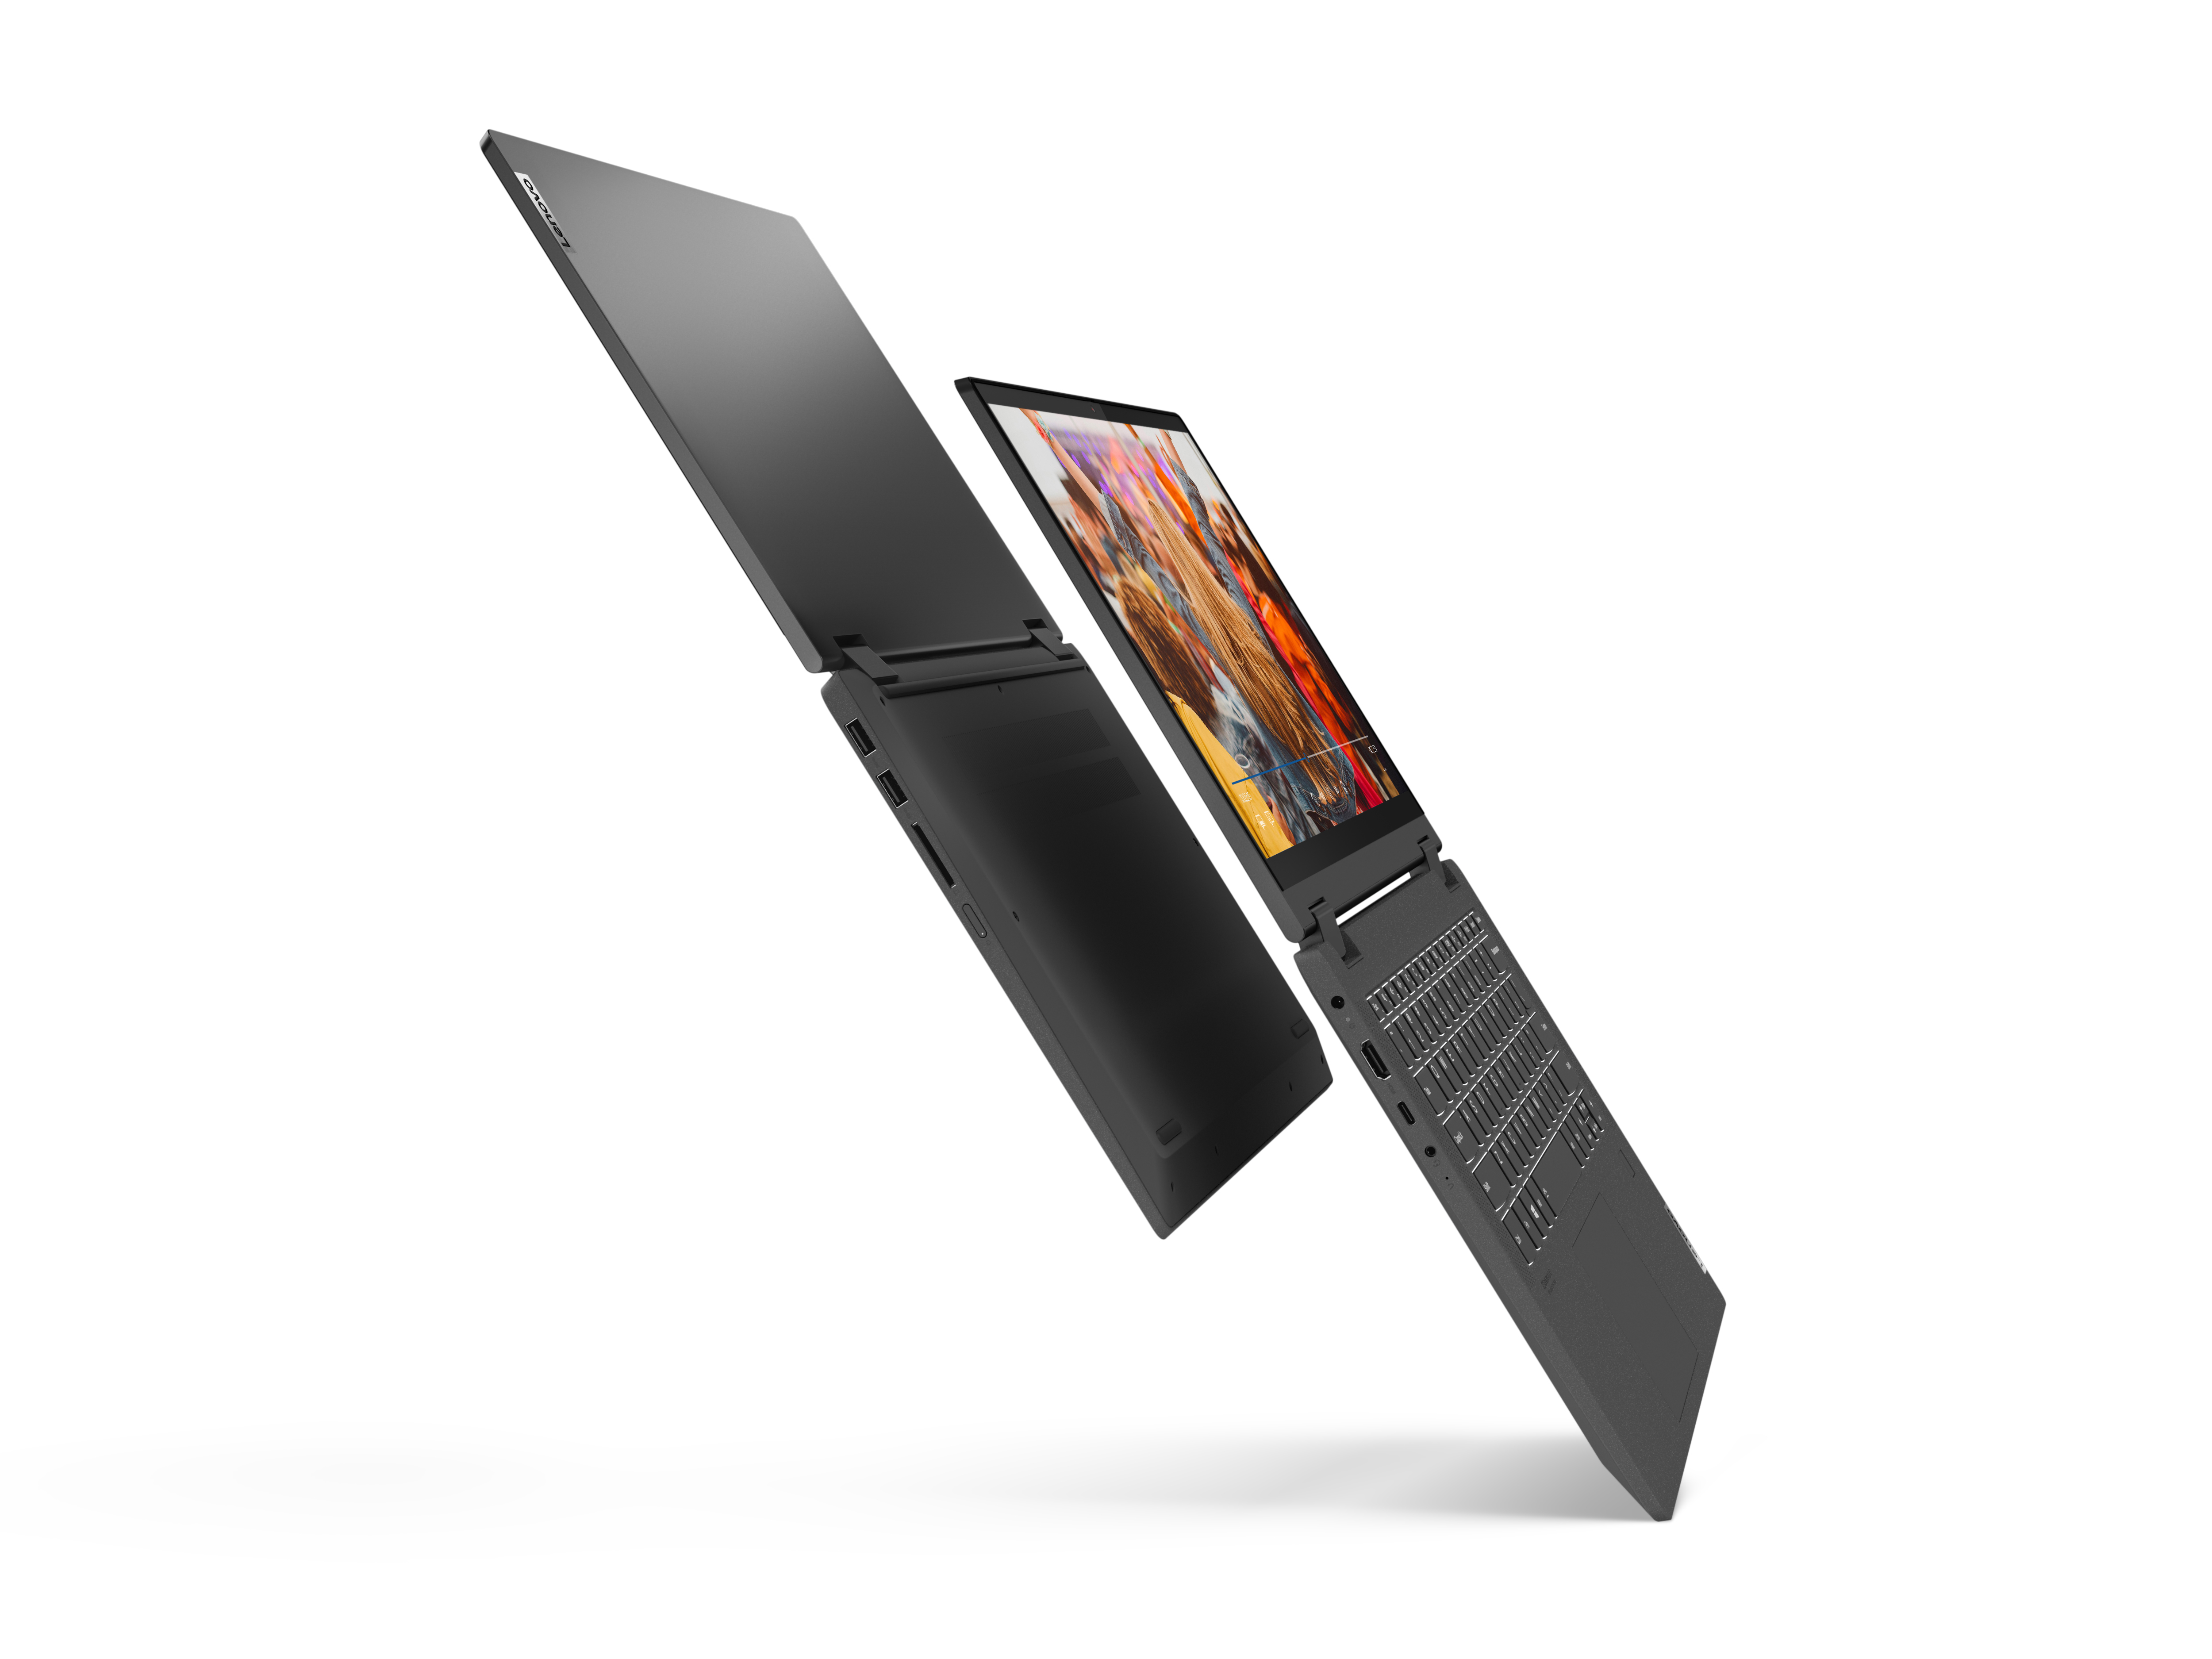 Lenovo Ideapad Flex 5i 14" FHD 2-in-1 Touchscreen Laptop, Intel Core i3, 4GB RAM, 128GB SSD, Graphite Gray, Windows 10, 82HS007CUS - image 5 of 14